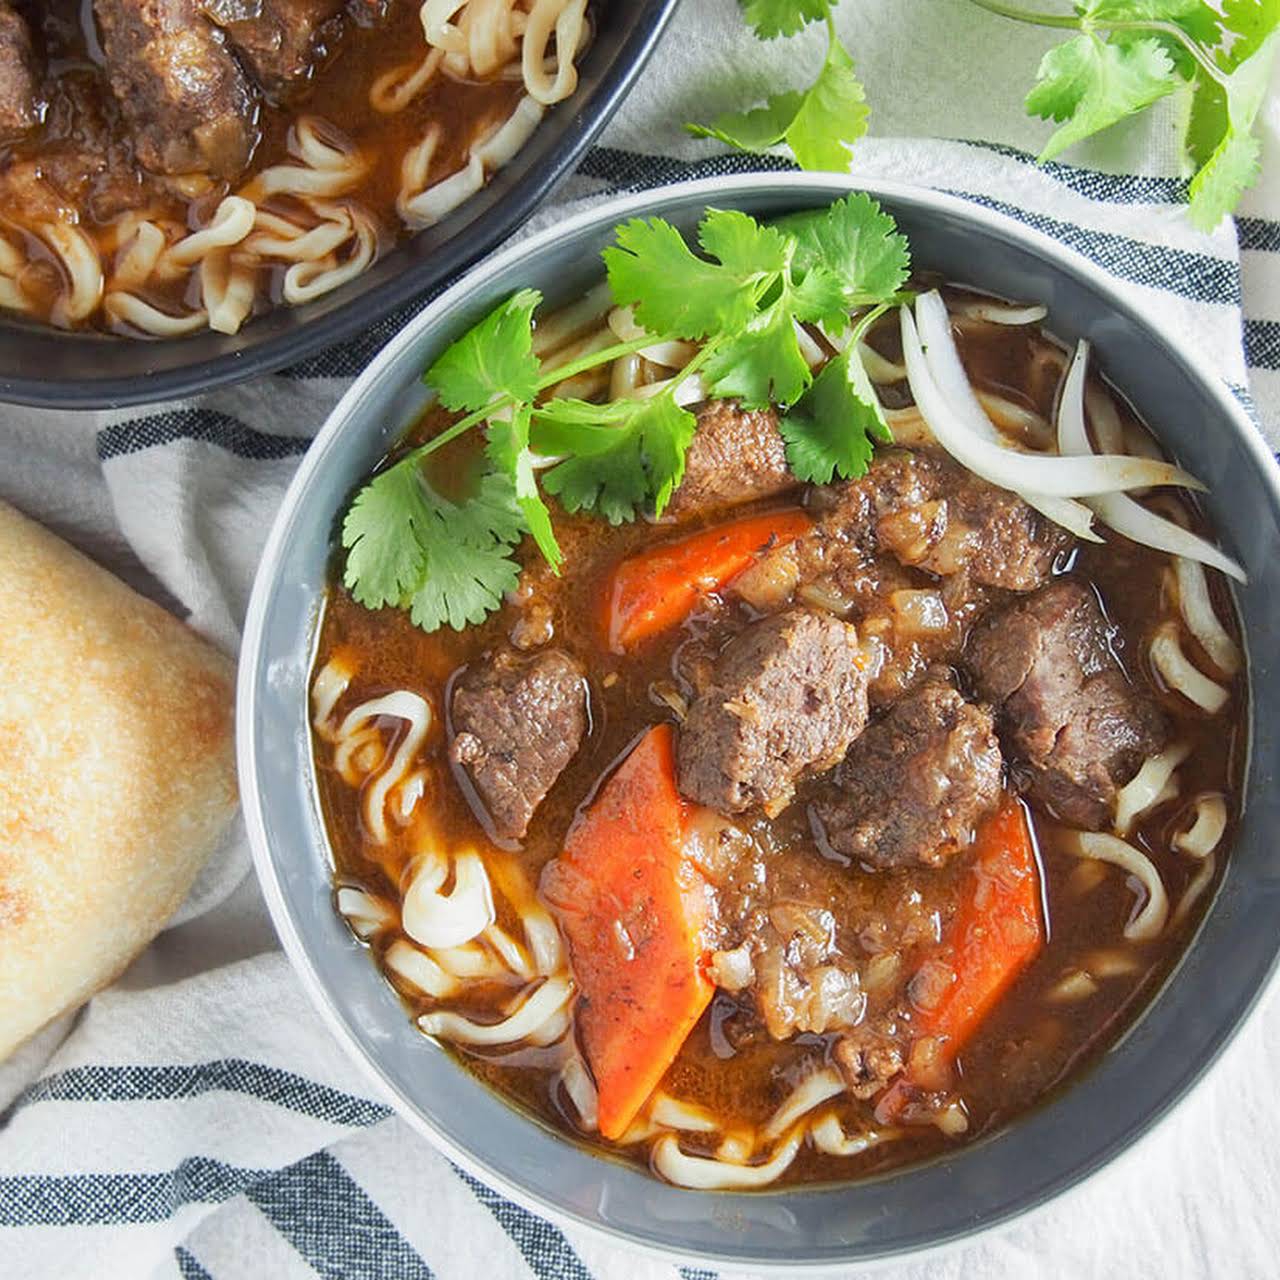 Vietnamese beef stew